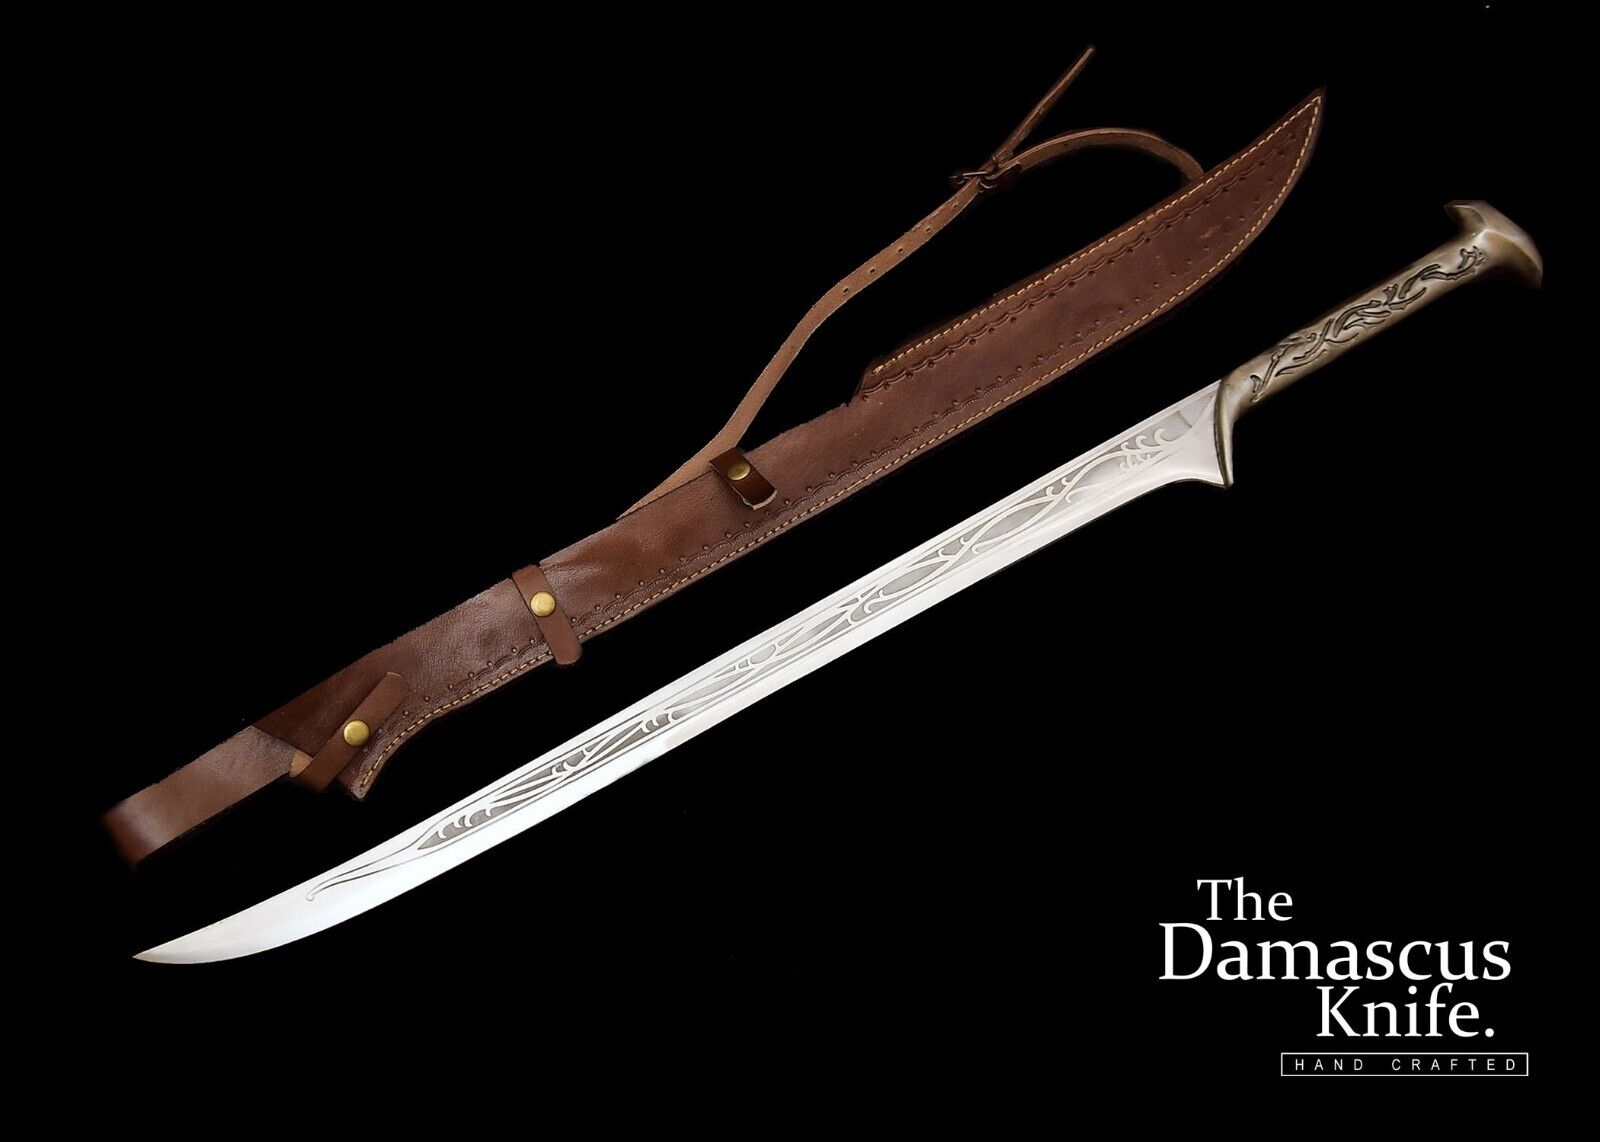 Thranduil Sword The Hobbit From LOTR Sword Replica +Leather Sheath + Wall Mount